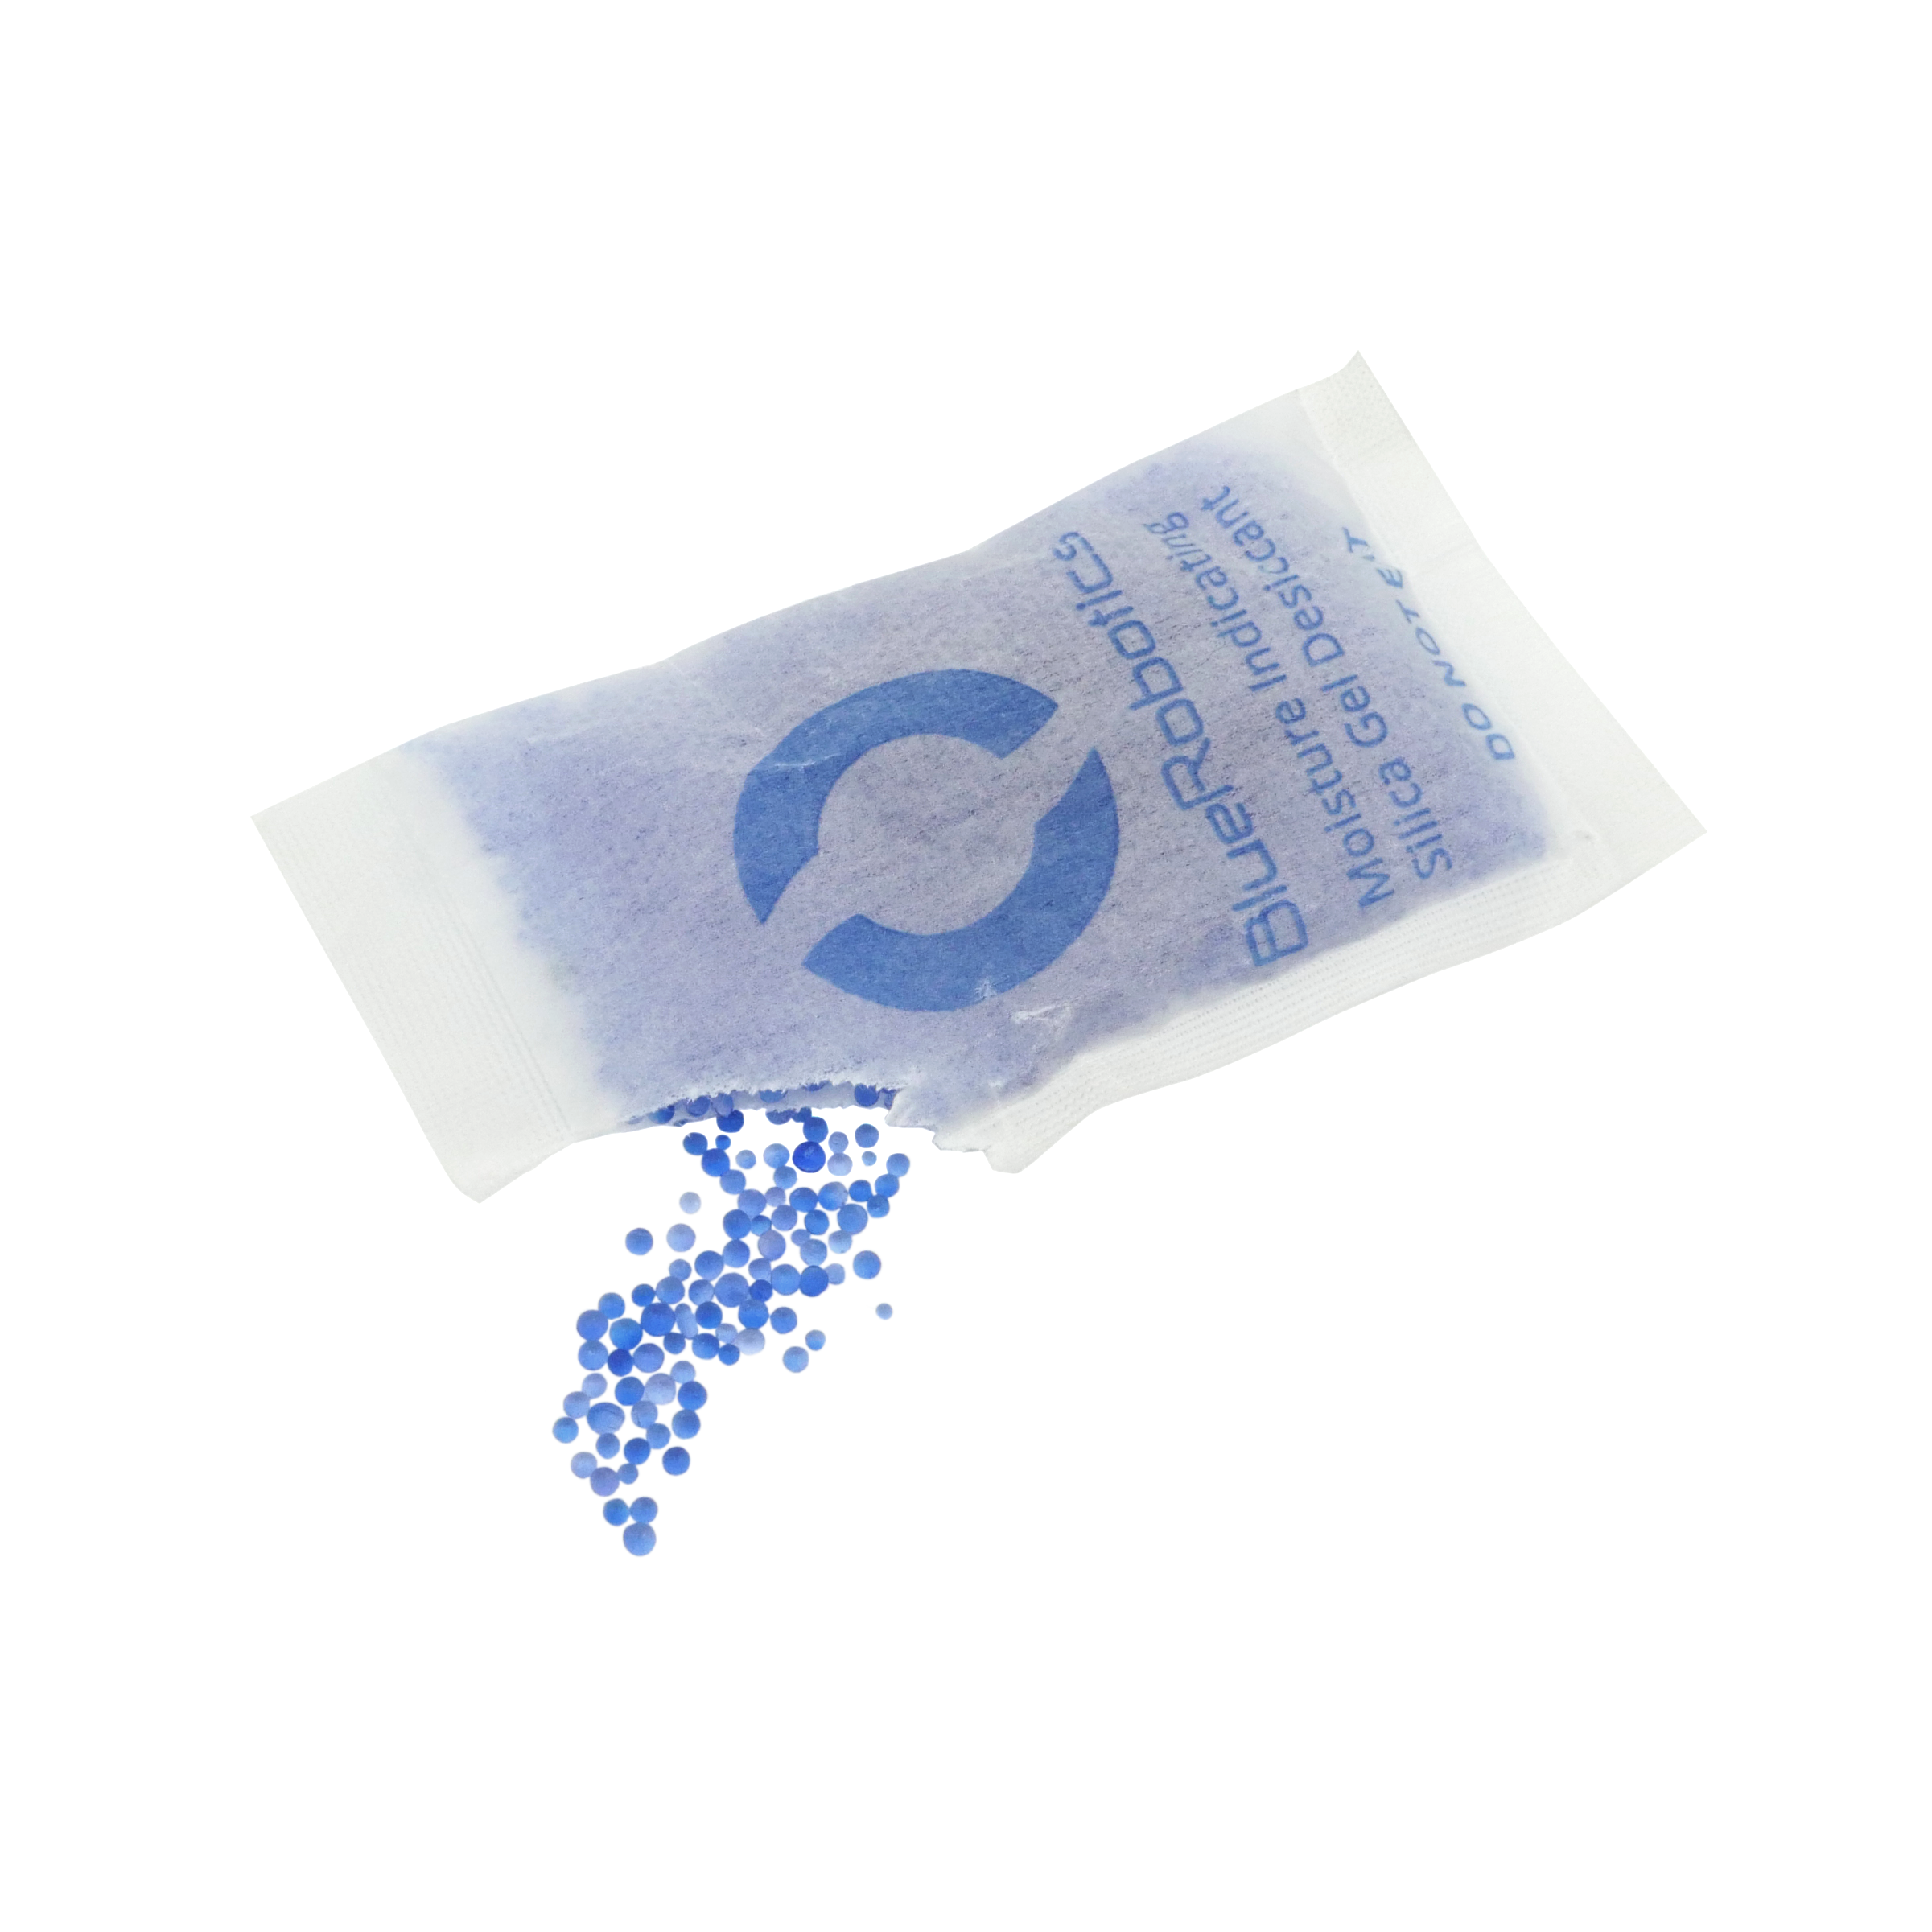 Buy Blue Indicating Silica Gel online at Interteck Packaging